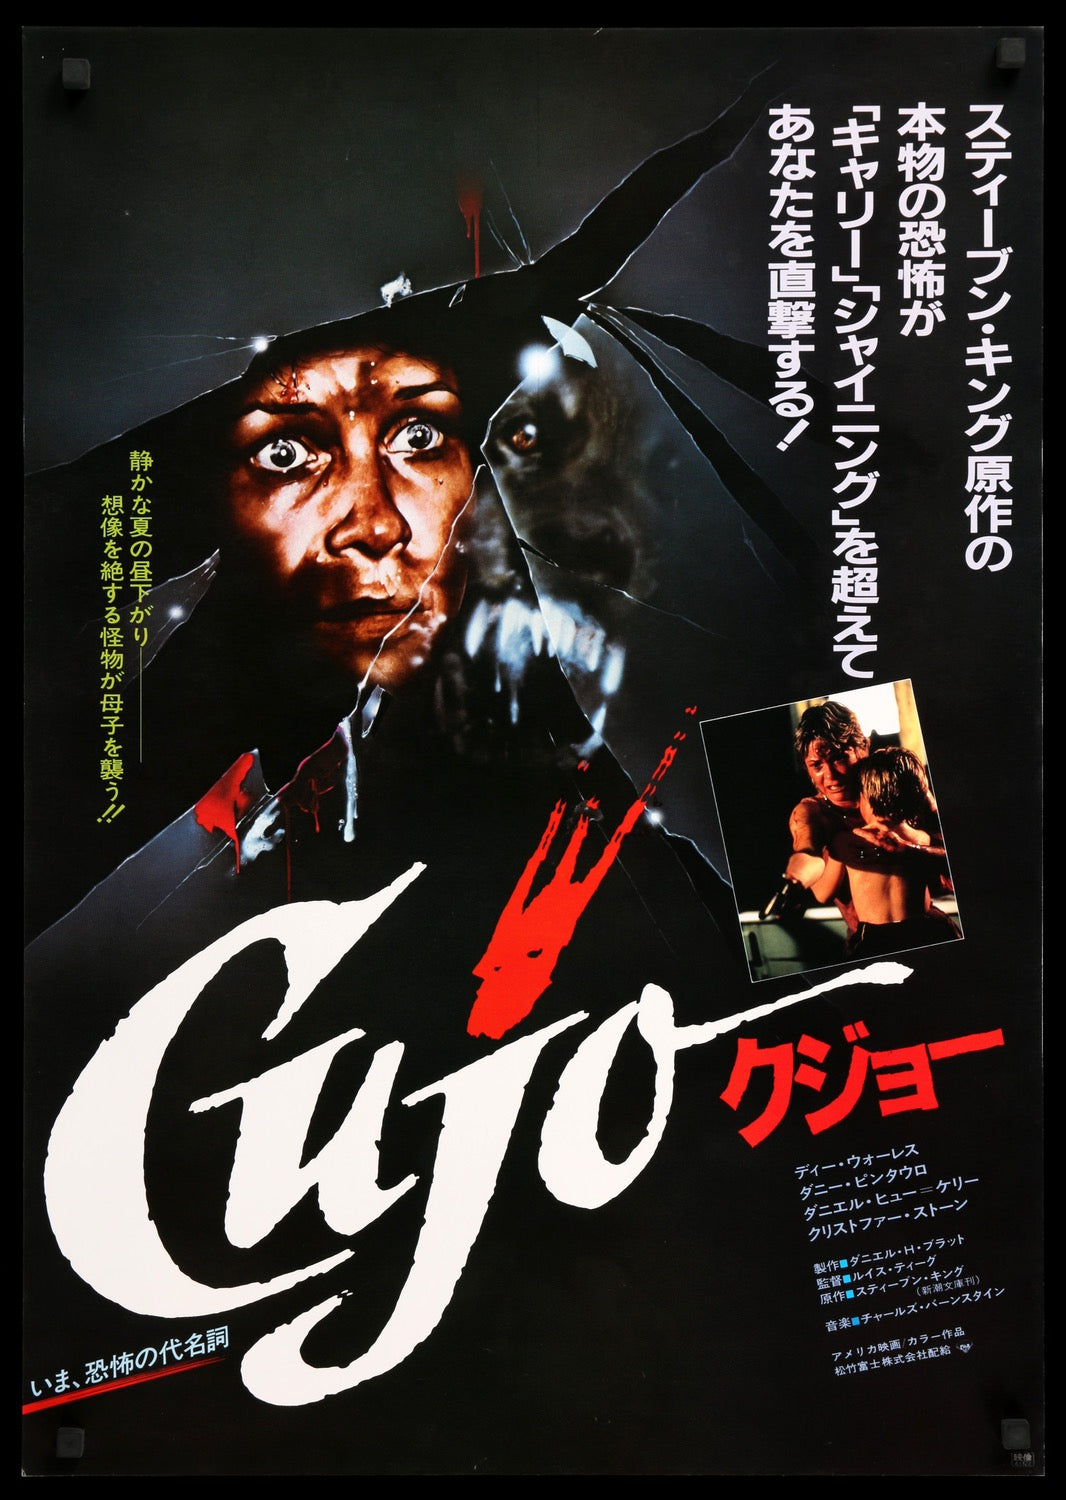 Cujo (1983) original movie poster for sale at Original Film Art